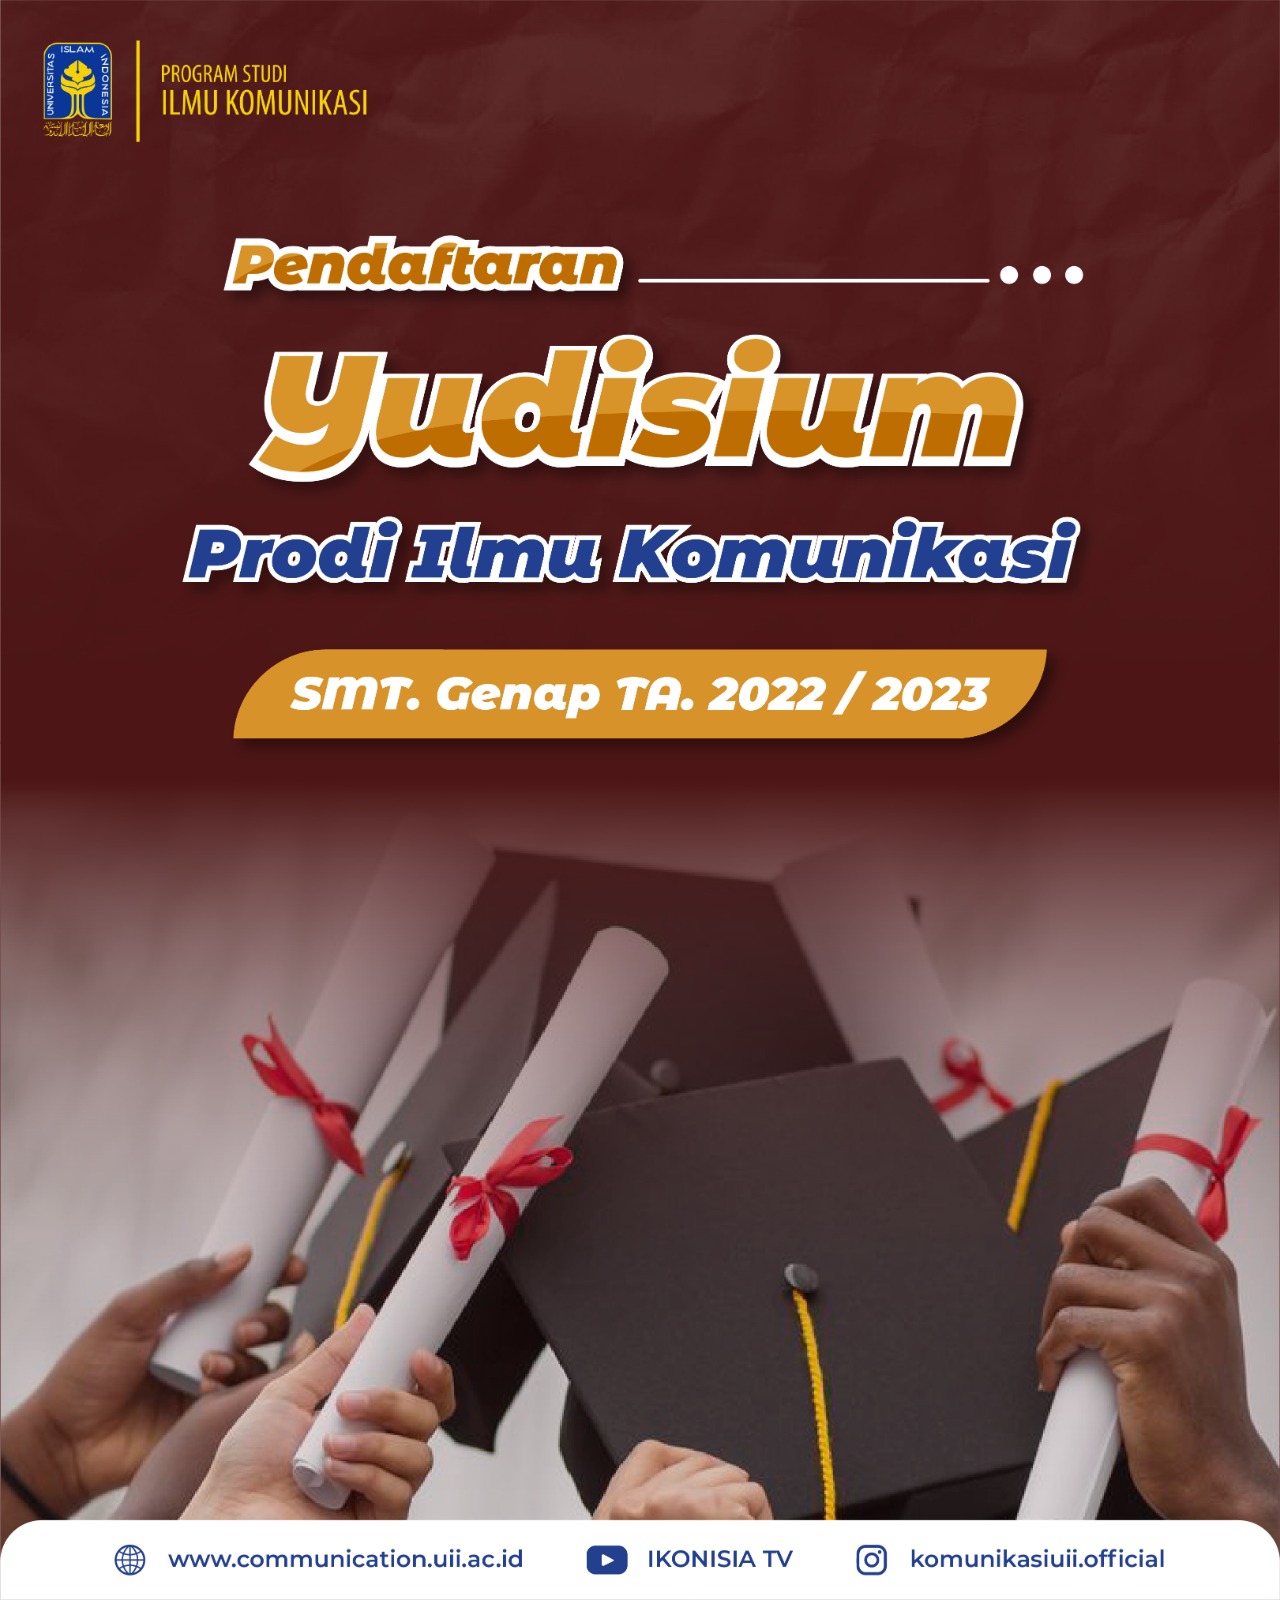 Pelaksanaan Yudisium Prodi Ilmu Komunikasi UII SMT Genap TA 2022/2023